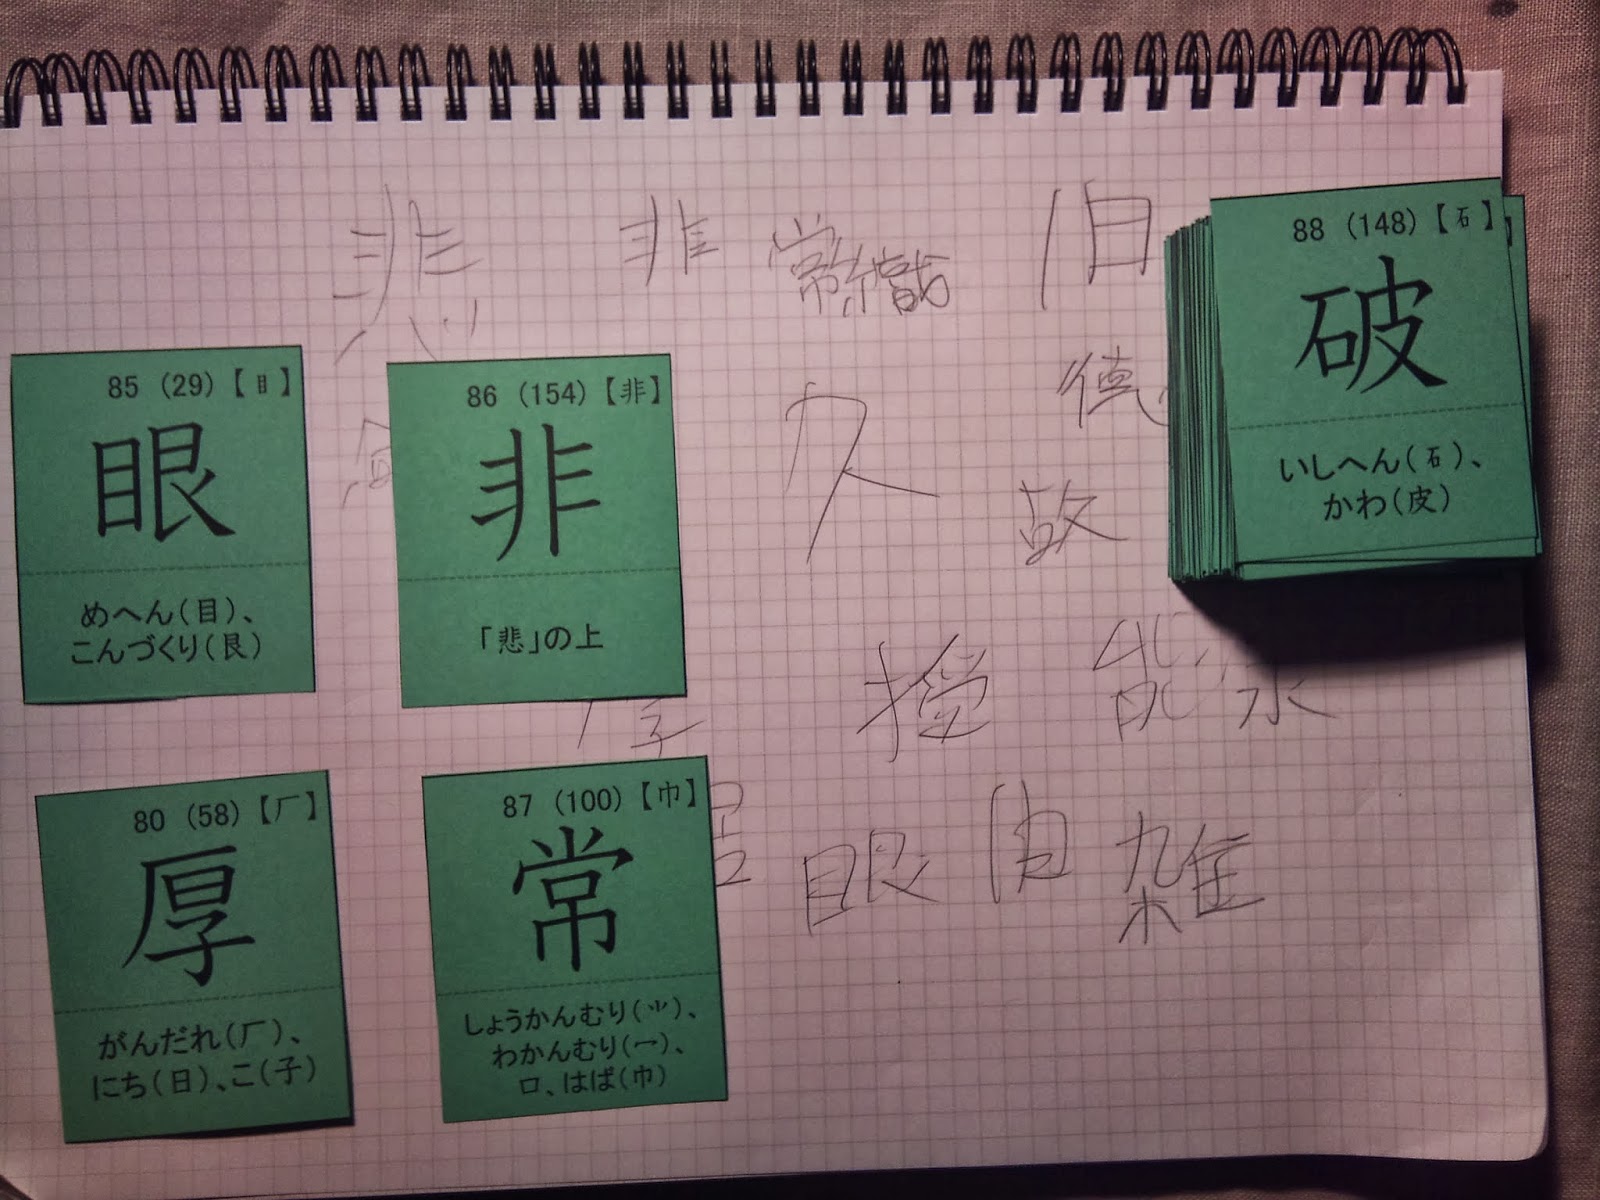 On Dyslexia 口で言えれば漢字は書ける をディスレクシア的に読む 漢字カードを購入